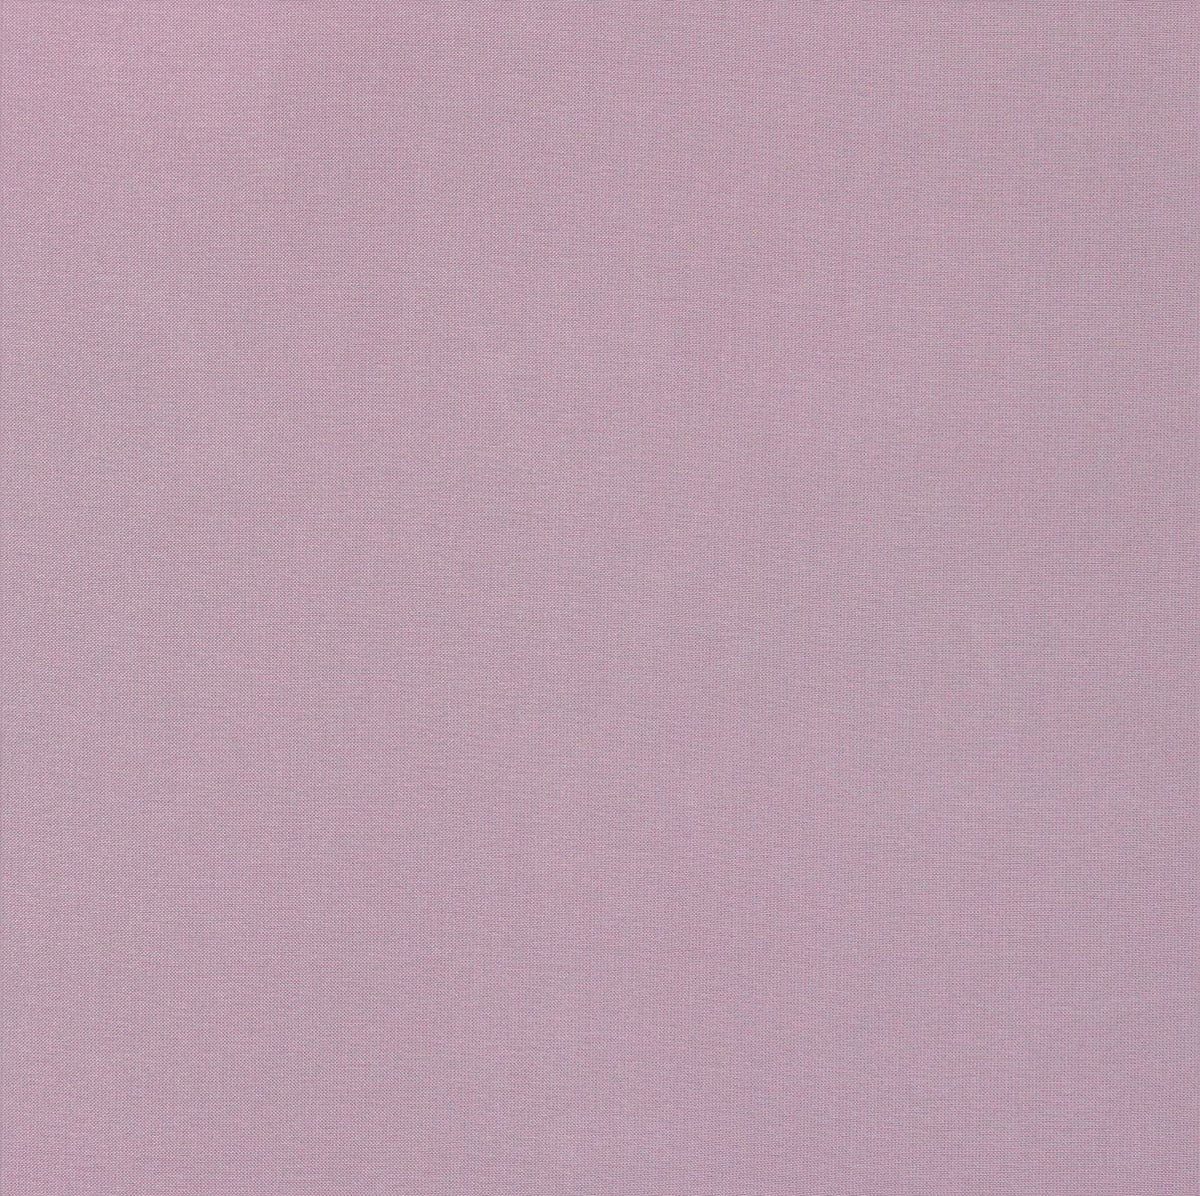 Day curtain purple uni day